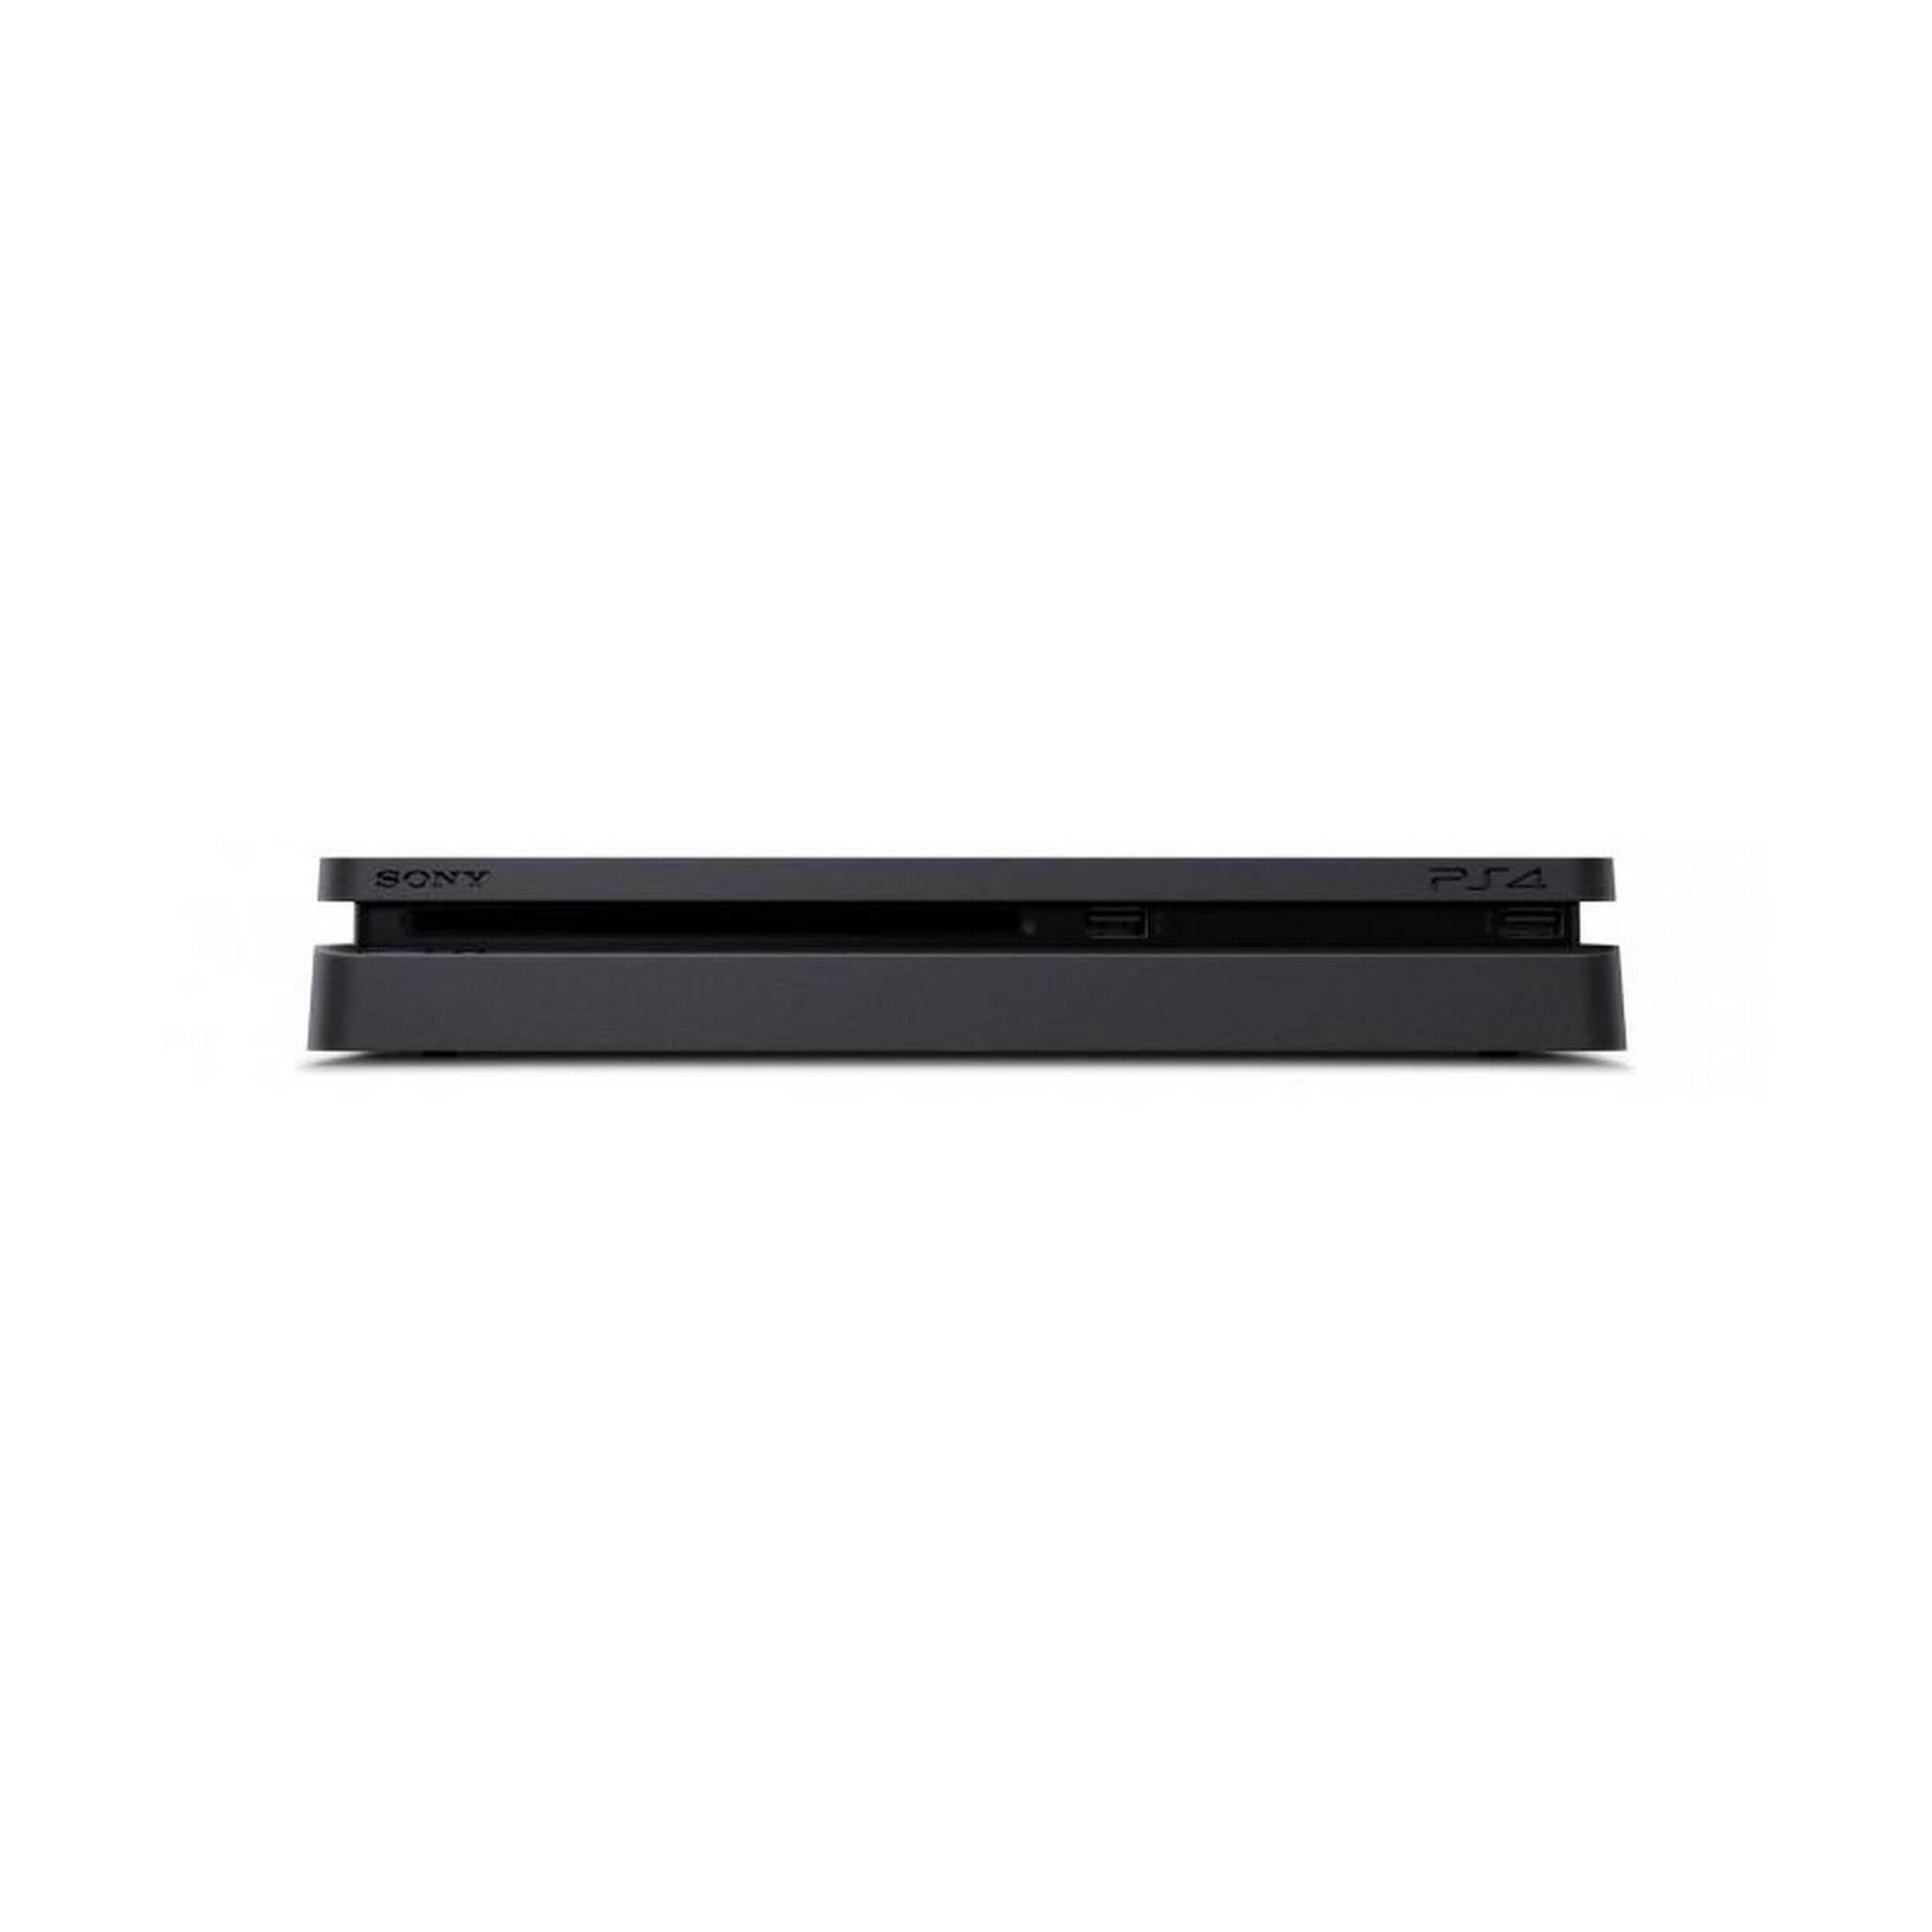 PlayStation 4 Slim 500GB + GT Sport + Uncharted 4 + Horizon Zero Dawn + 3M PSN Card + Fortnite Voucher